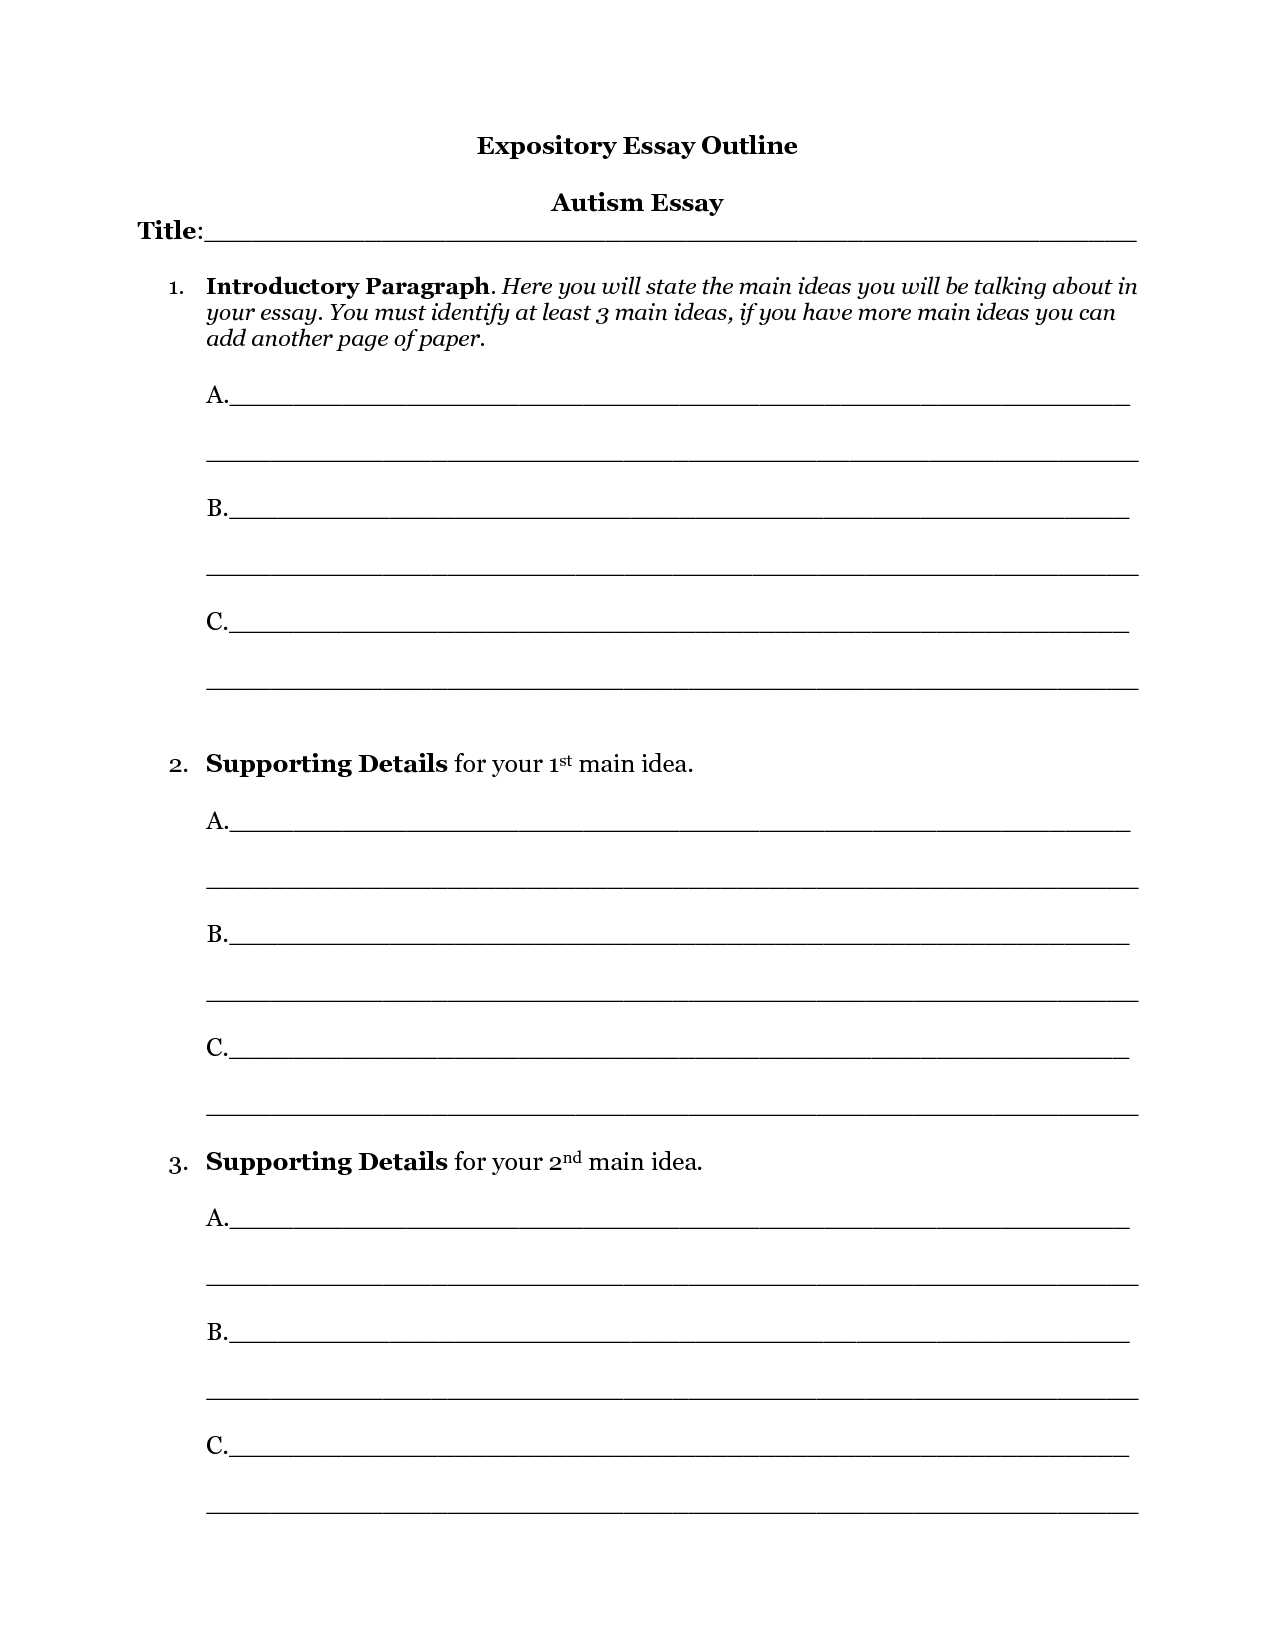 Career Research Worksheet Also Expository Essay format Outline Outline Argumentative Essay Quiz